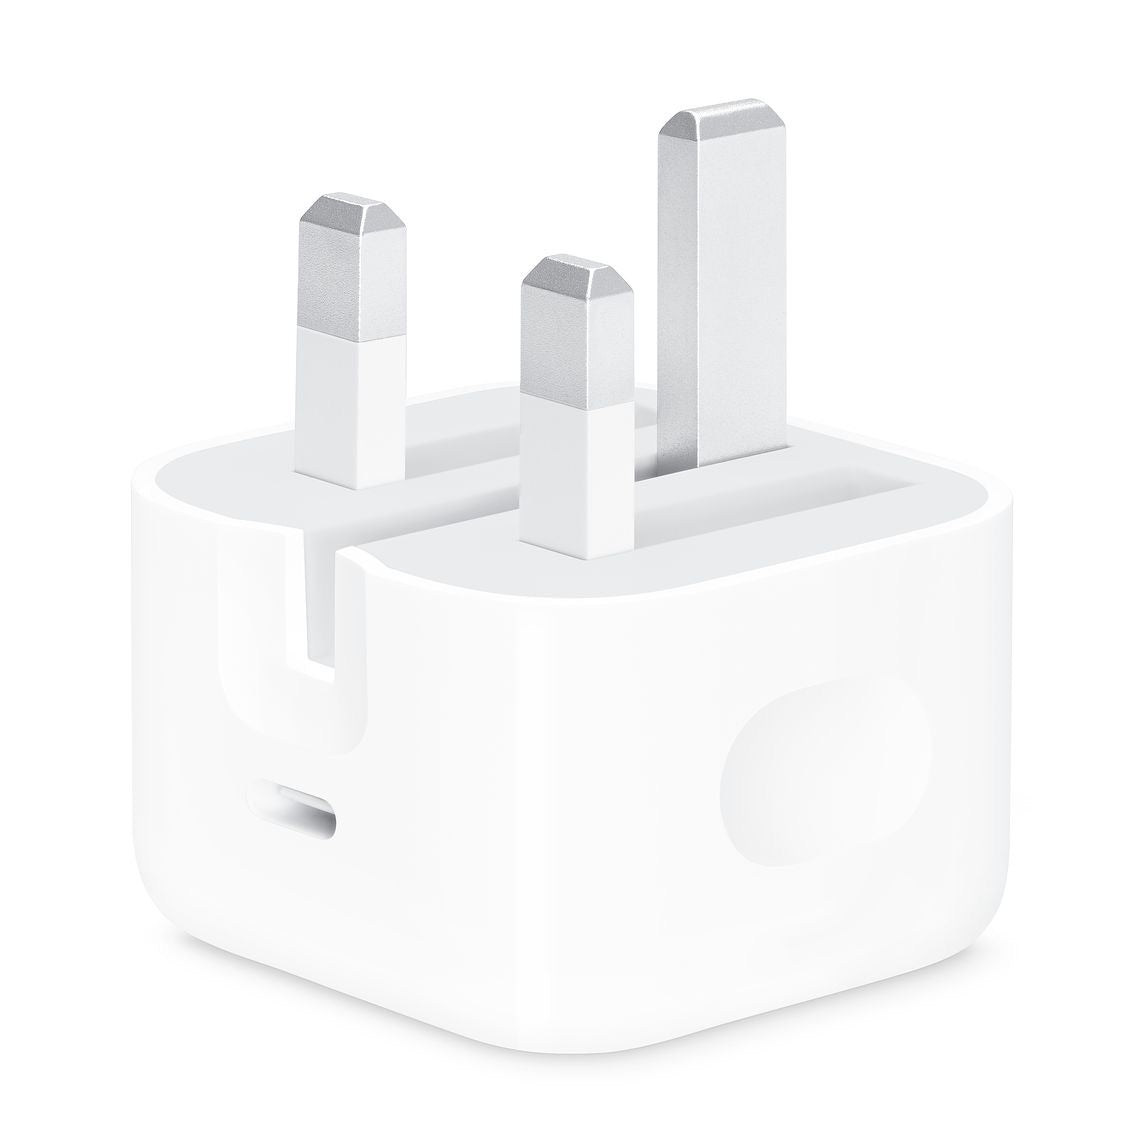 Apple 20W USB-C Power chager plug